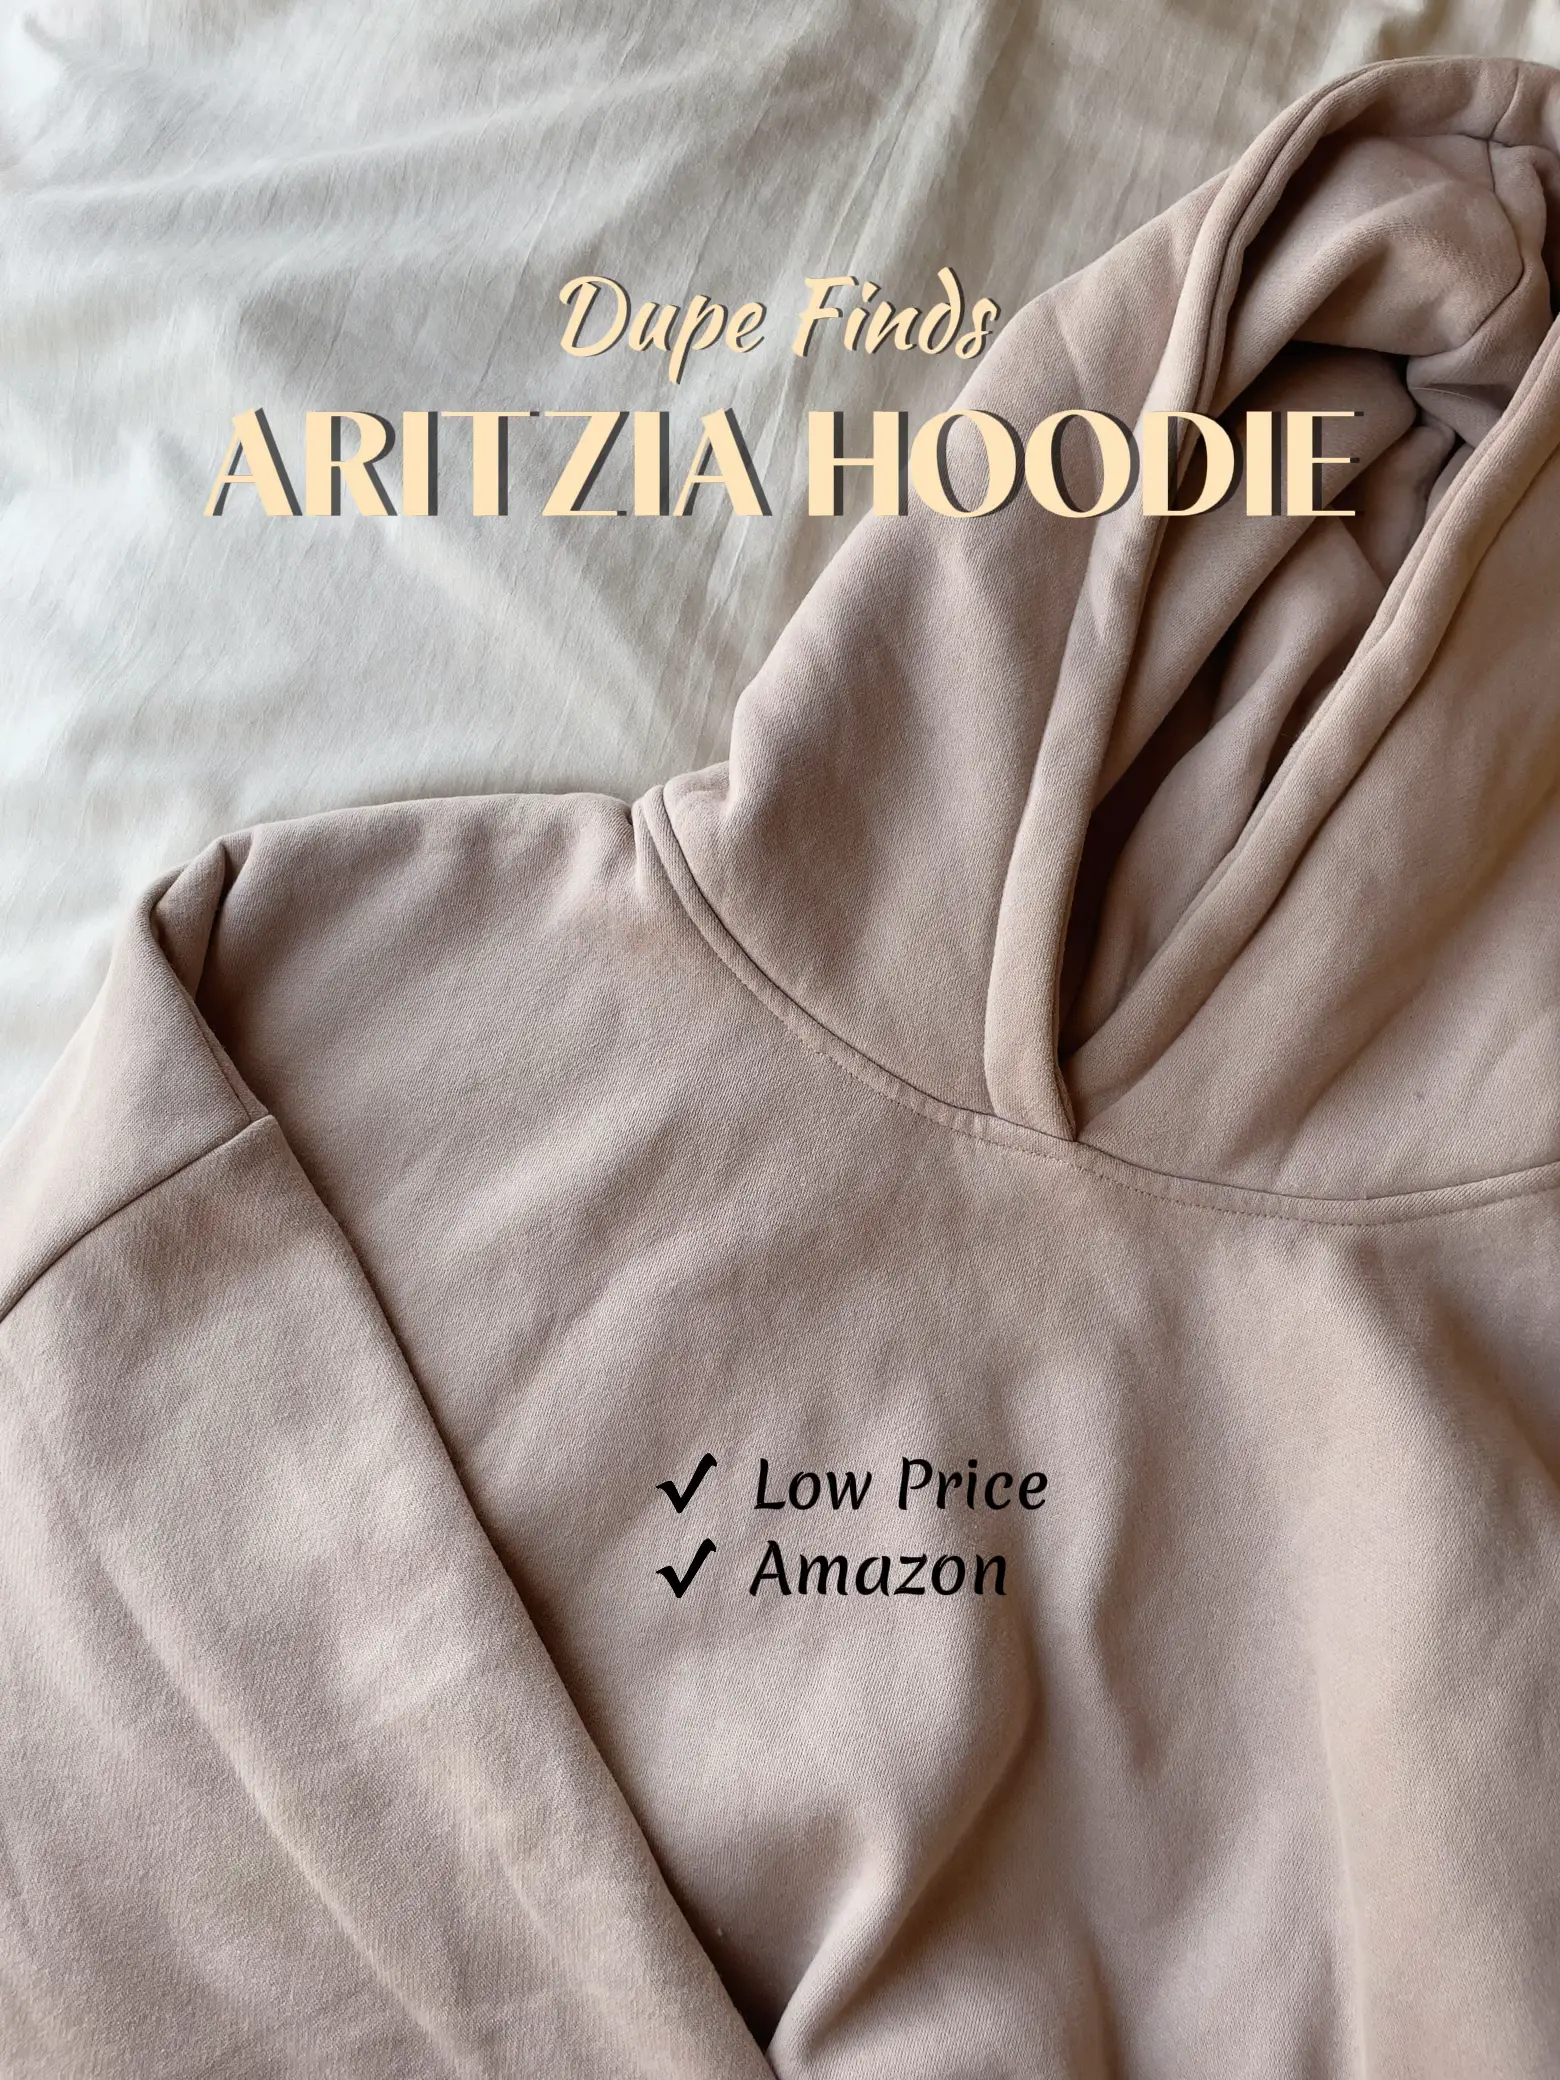 Scuba Full-Zip Hoodie, Women's Hoodies & Sweatshirts, lululemon